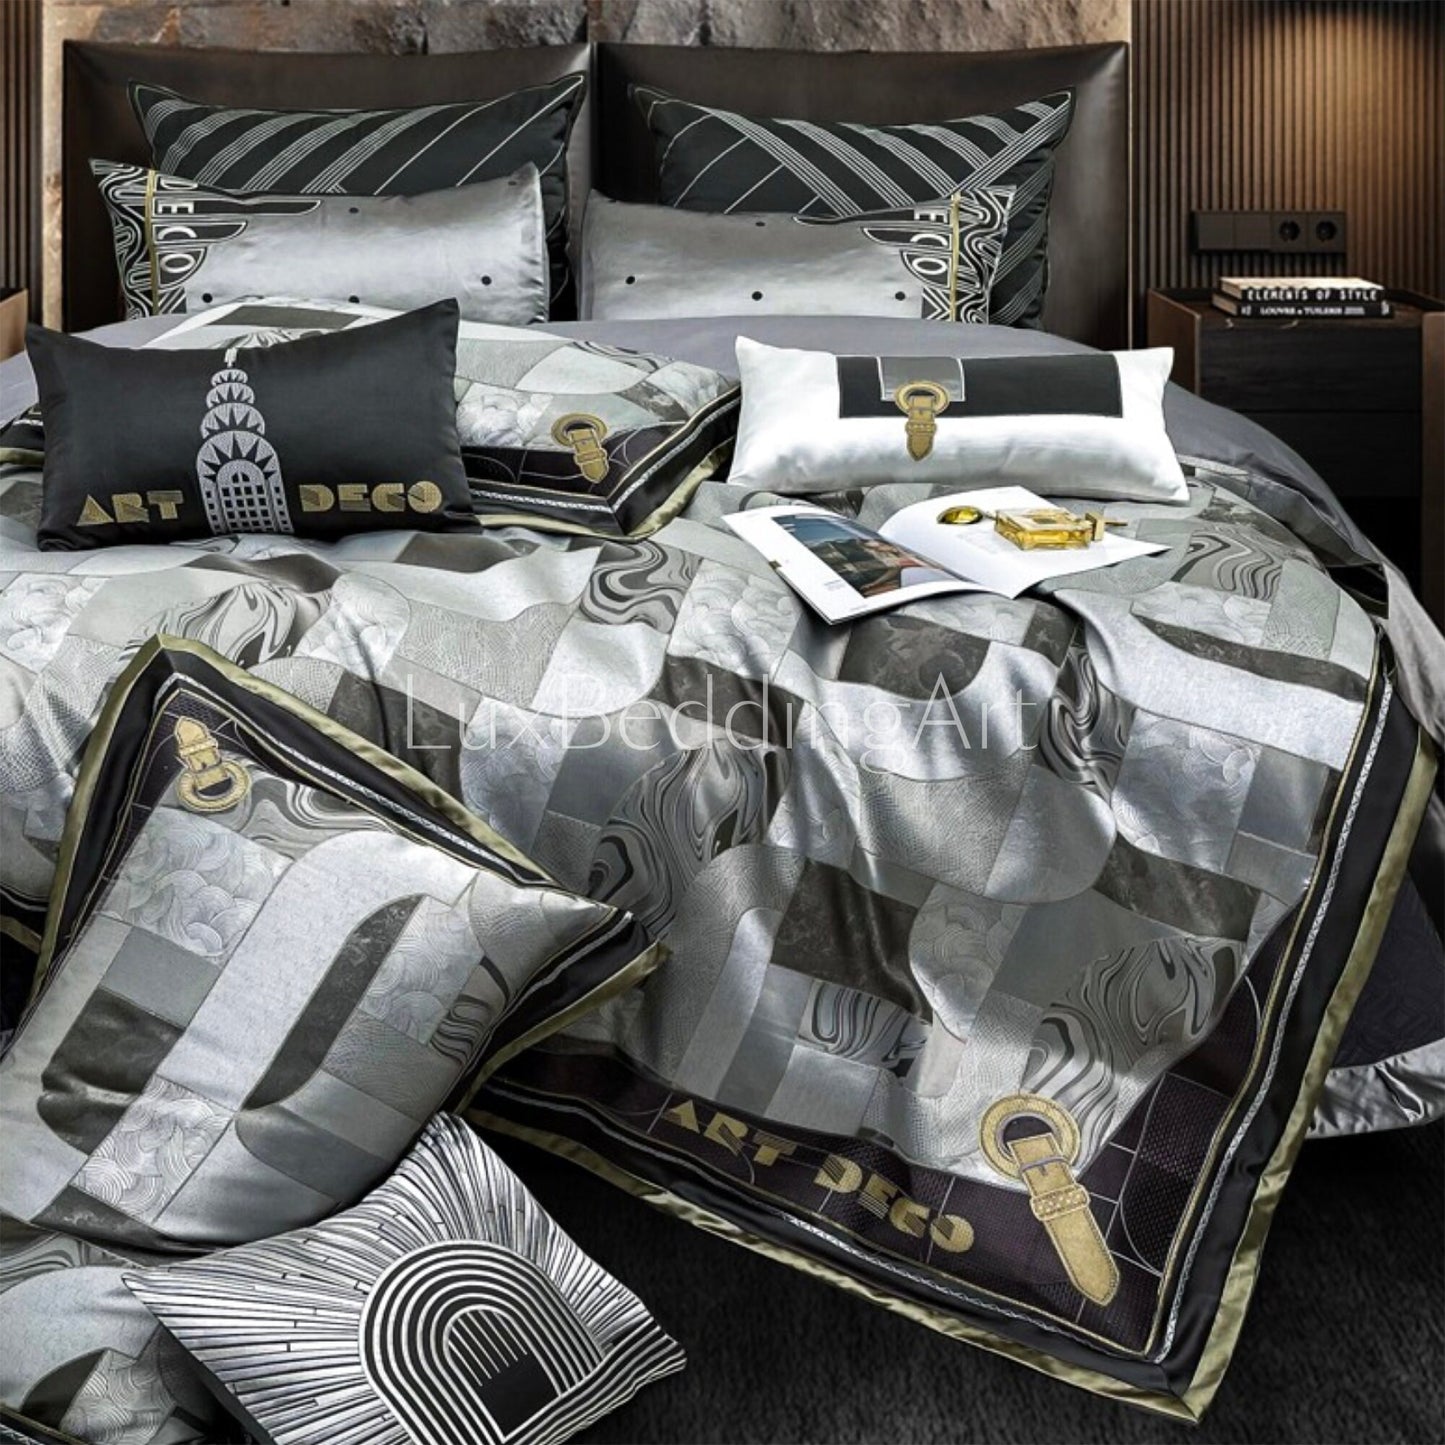 Luxury Premium Large Jacquard with Embroidery Gris Art Deco style design Bedding Set  • 4/6/10/12 PCS